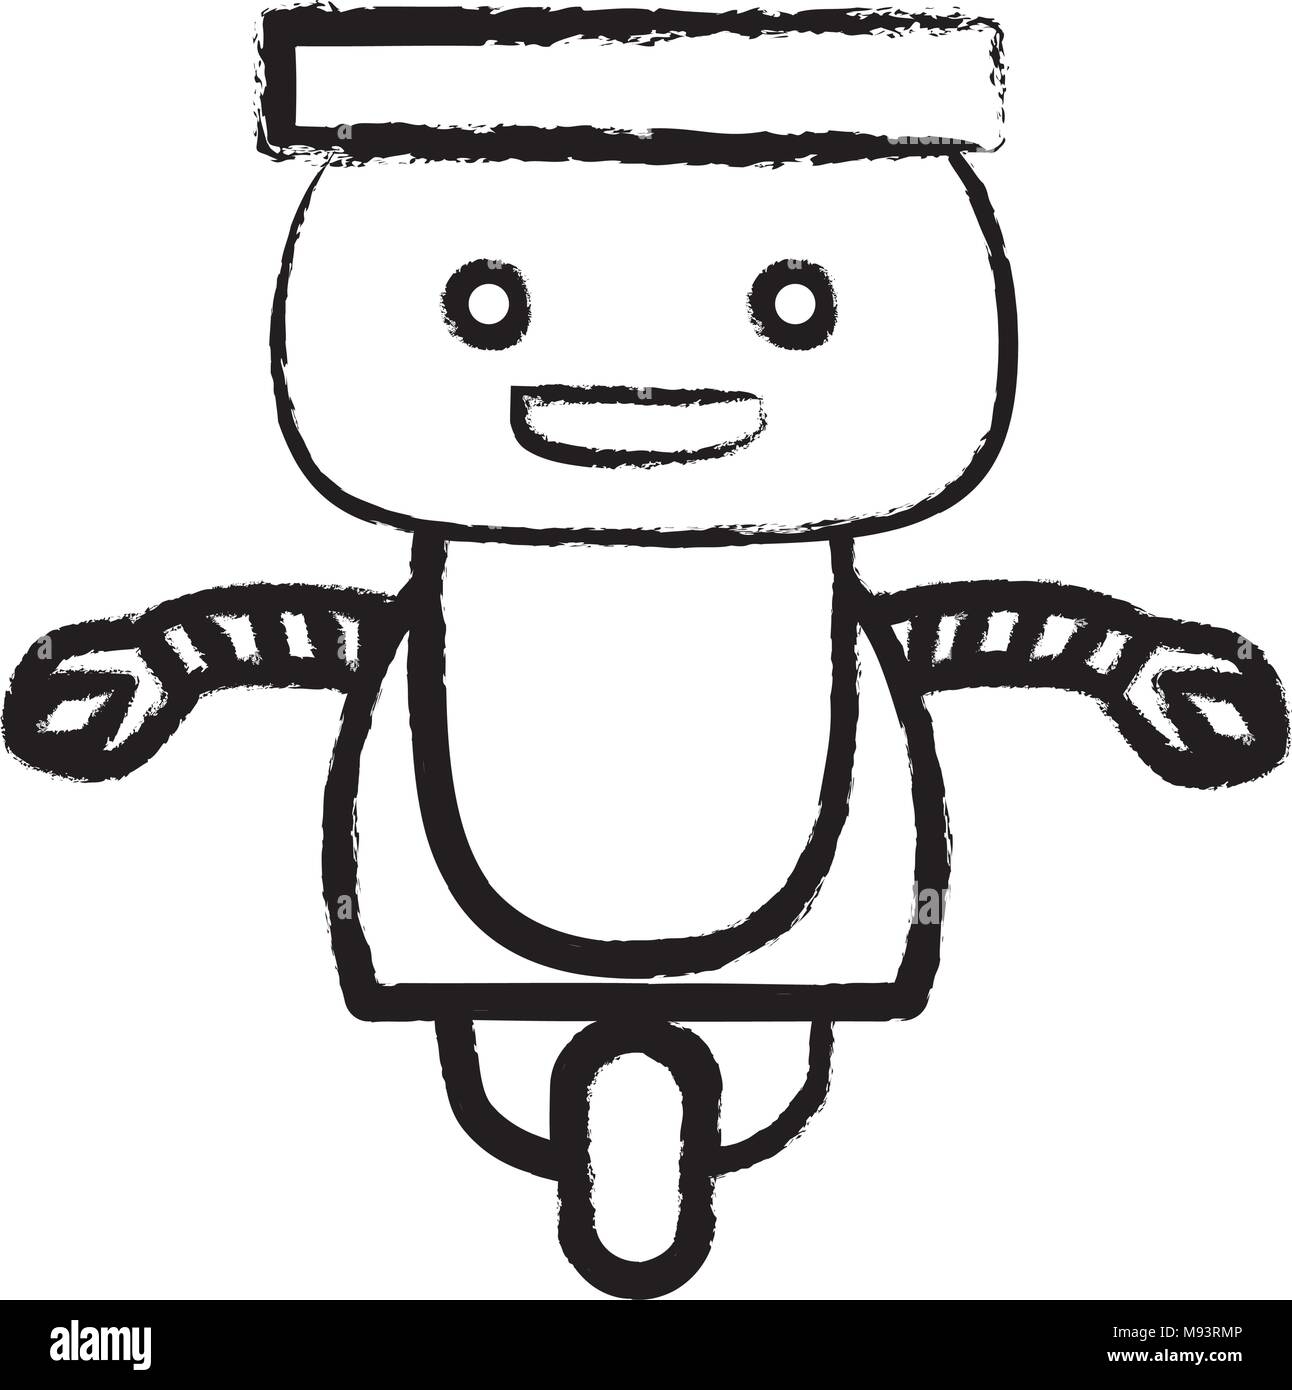 https://c8.alamy.com/comp/M93RMP/sketch-of-cartoon-little-robot-icon-over-white-background-vector-illustration-M93RMP.jpg